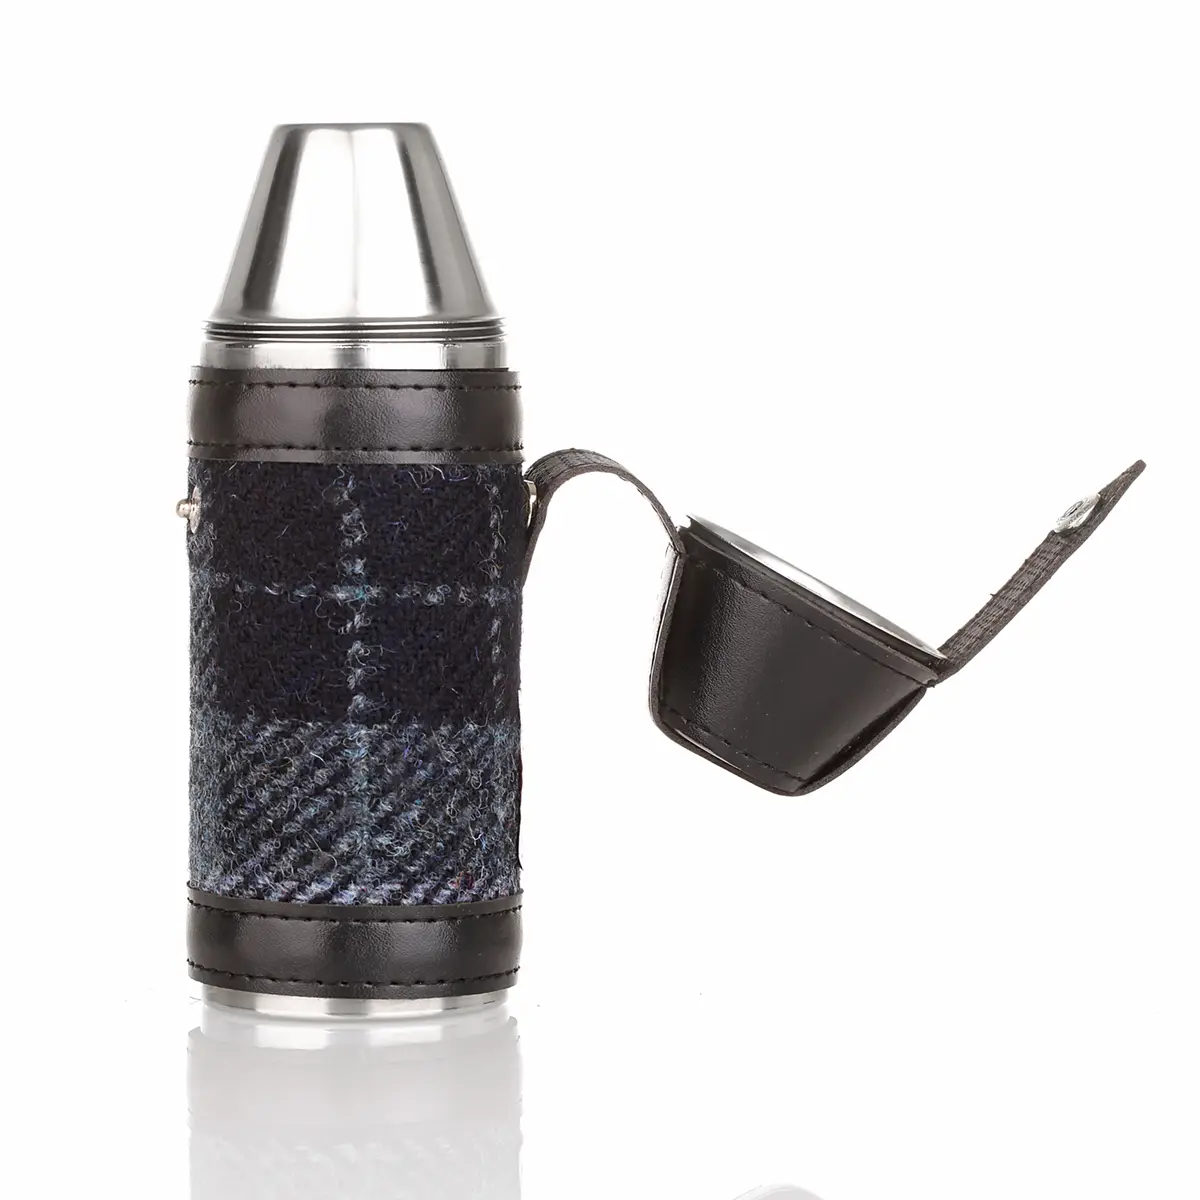 Harris Tweed Hunting Flask / Campingflasche in Grey and Black Tartan